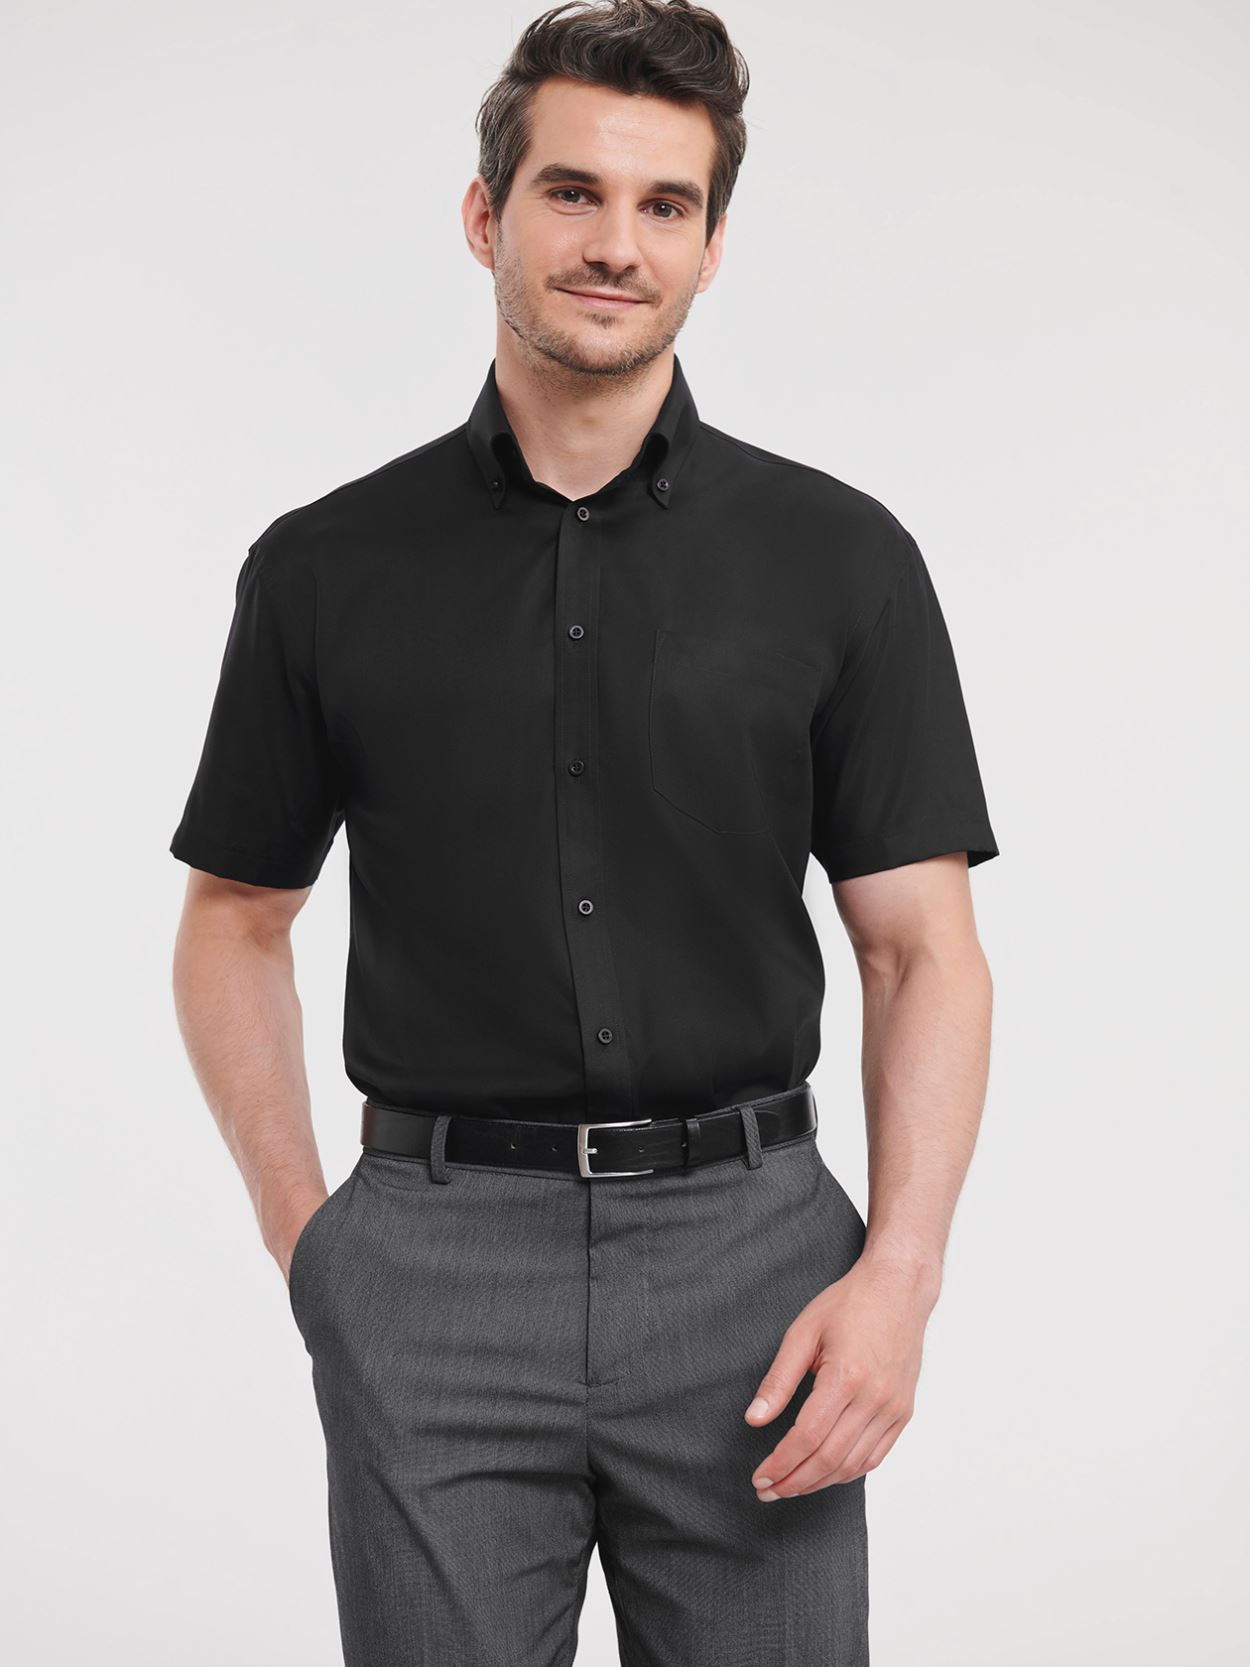 957M Mens Short Sleeve Ultimate Non Iron Luxury Shirt Image 1